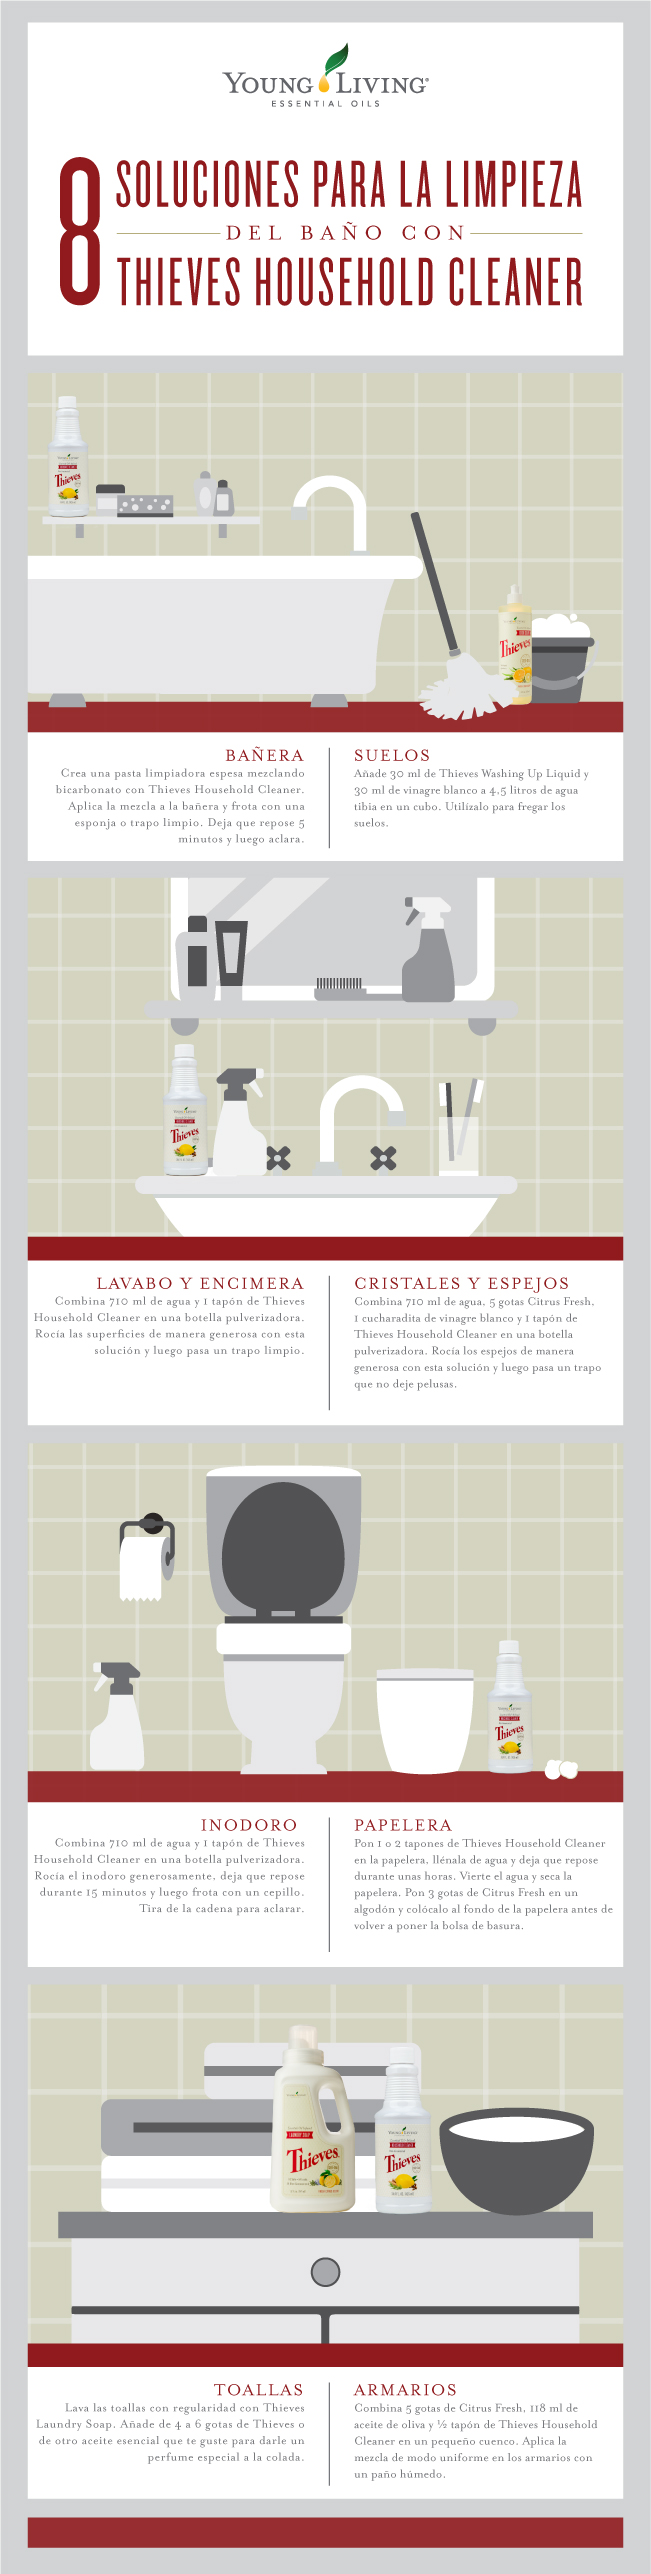 8 trucos para limpiar el baño con Thieves Household Cleaner.